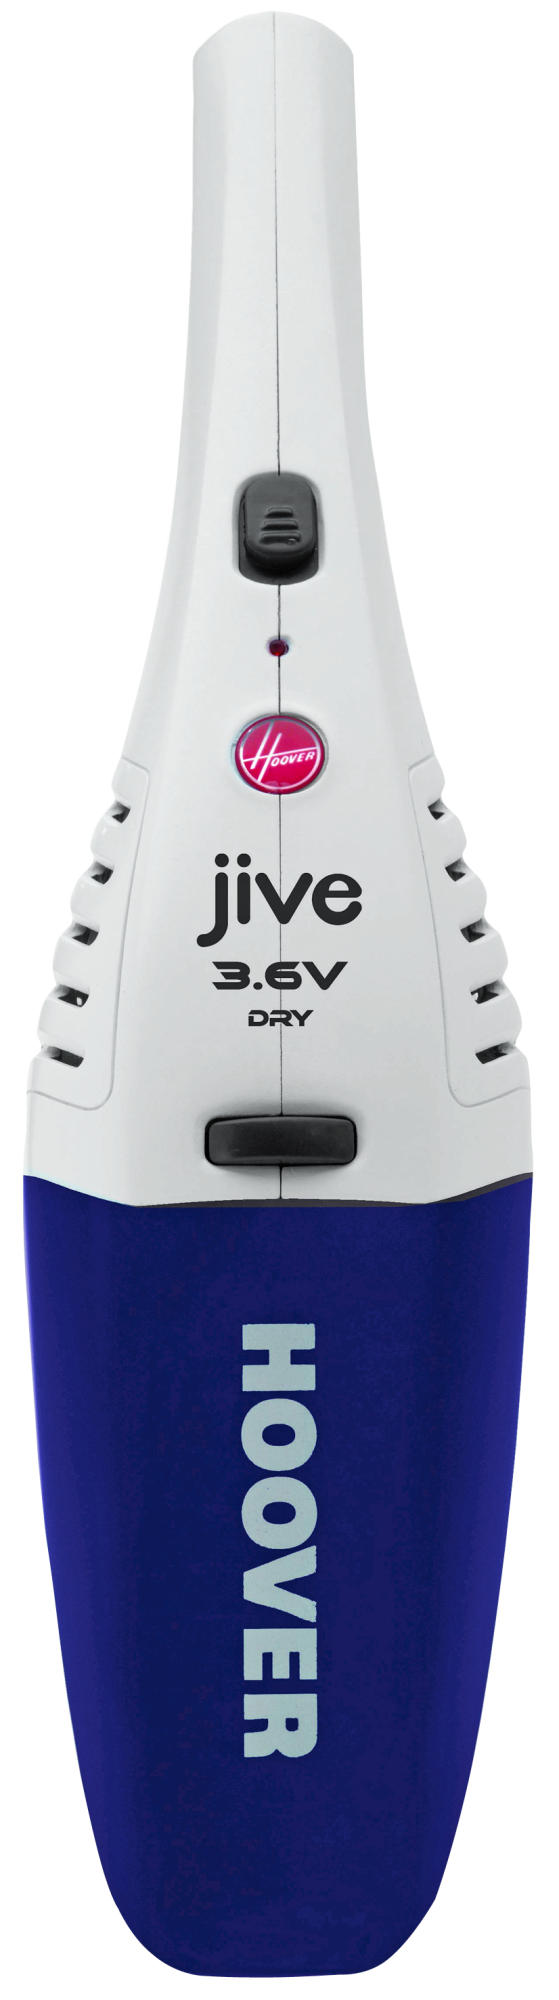 Mini Aspiradora Hoover jive 36 dwv6 3.6 autonomía 10 300 ml mano filtrado microfiltro violeta sj36dwv6 dry para batería nimh 0.3 73 36v